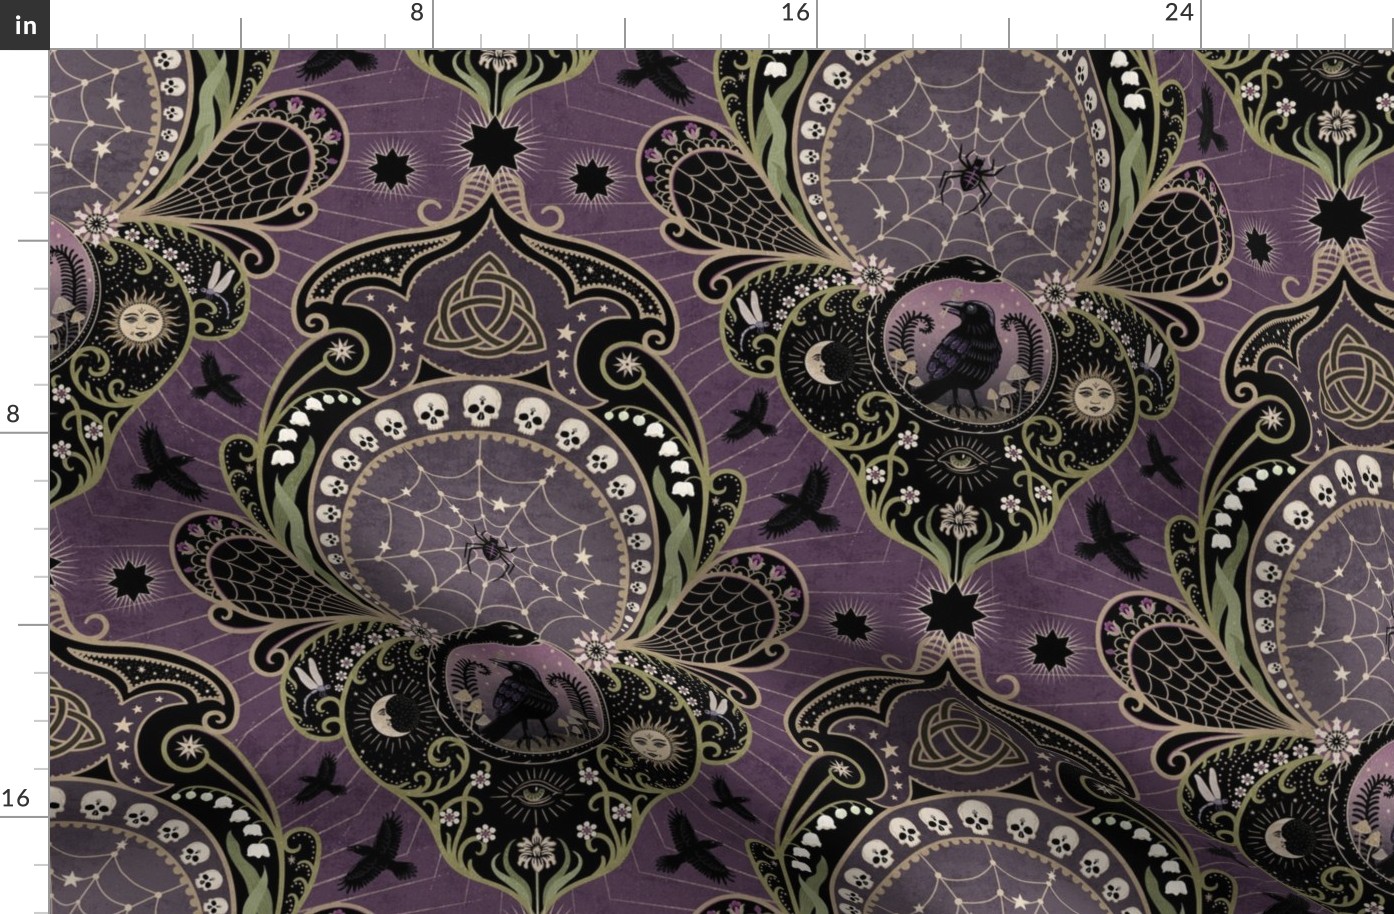 Whimsigothic maximalist purple art nouveau damask - spider, ravens, ouroboros, skulls, sun and moon - large